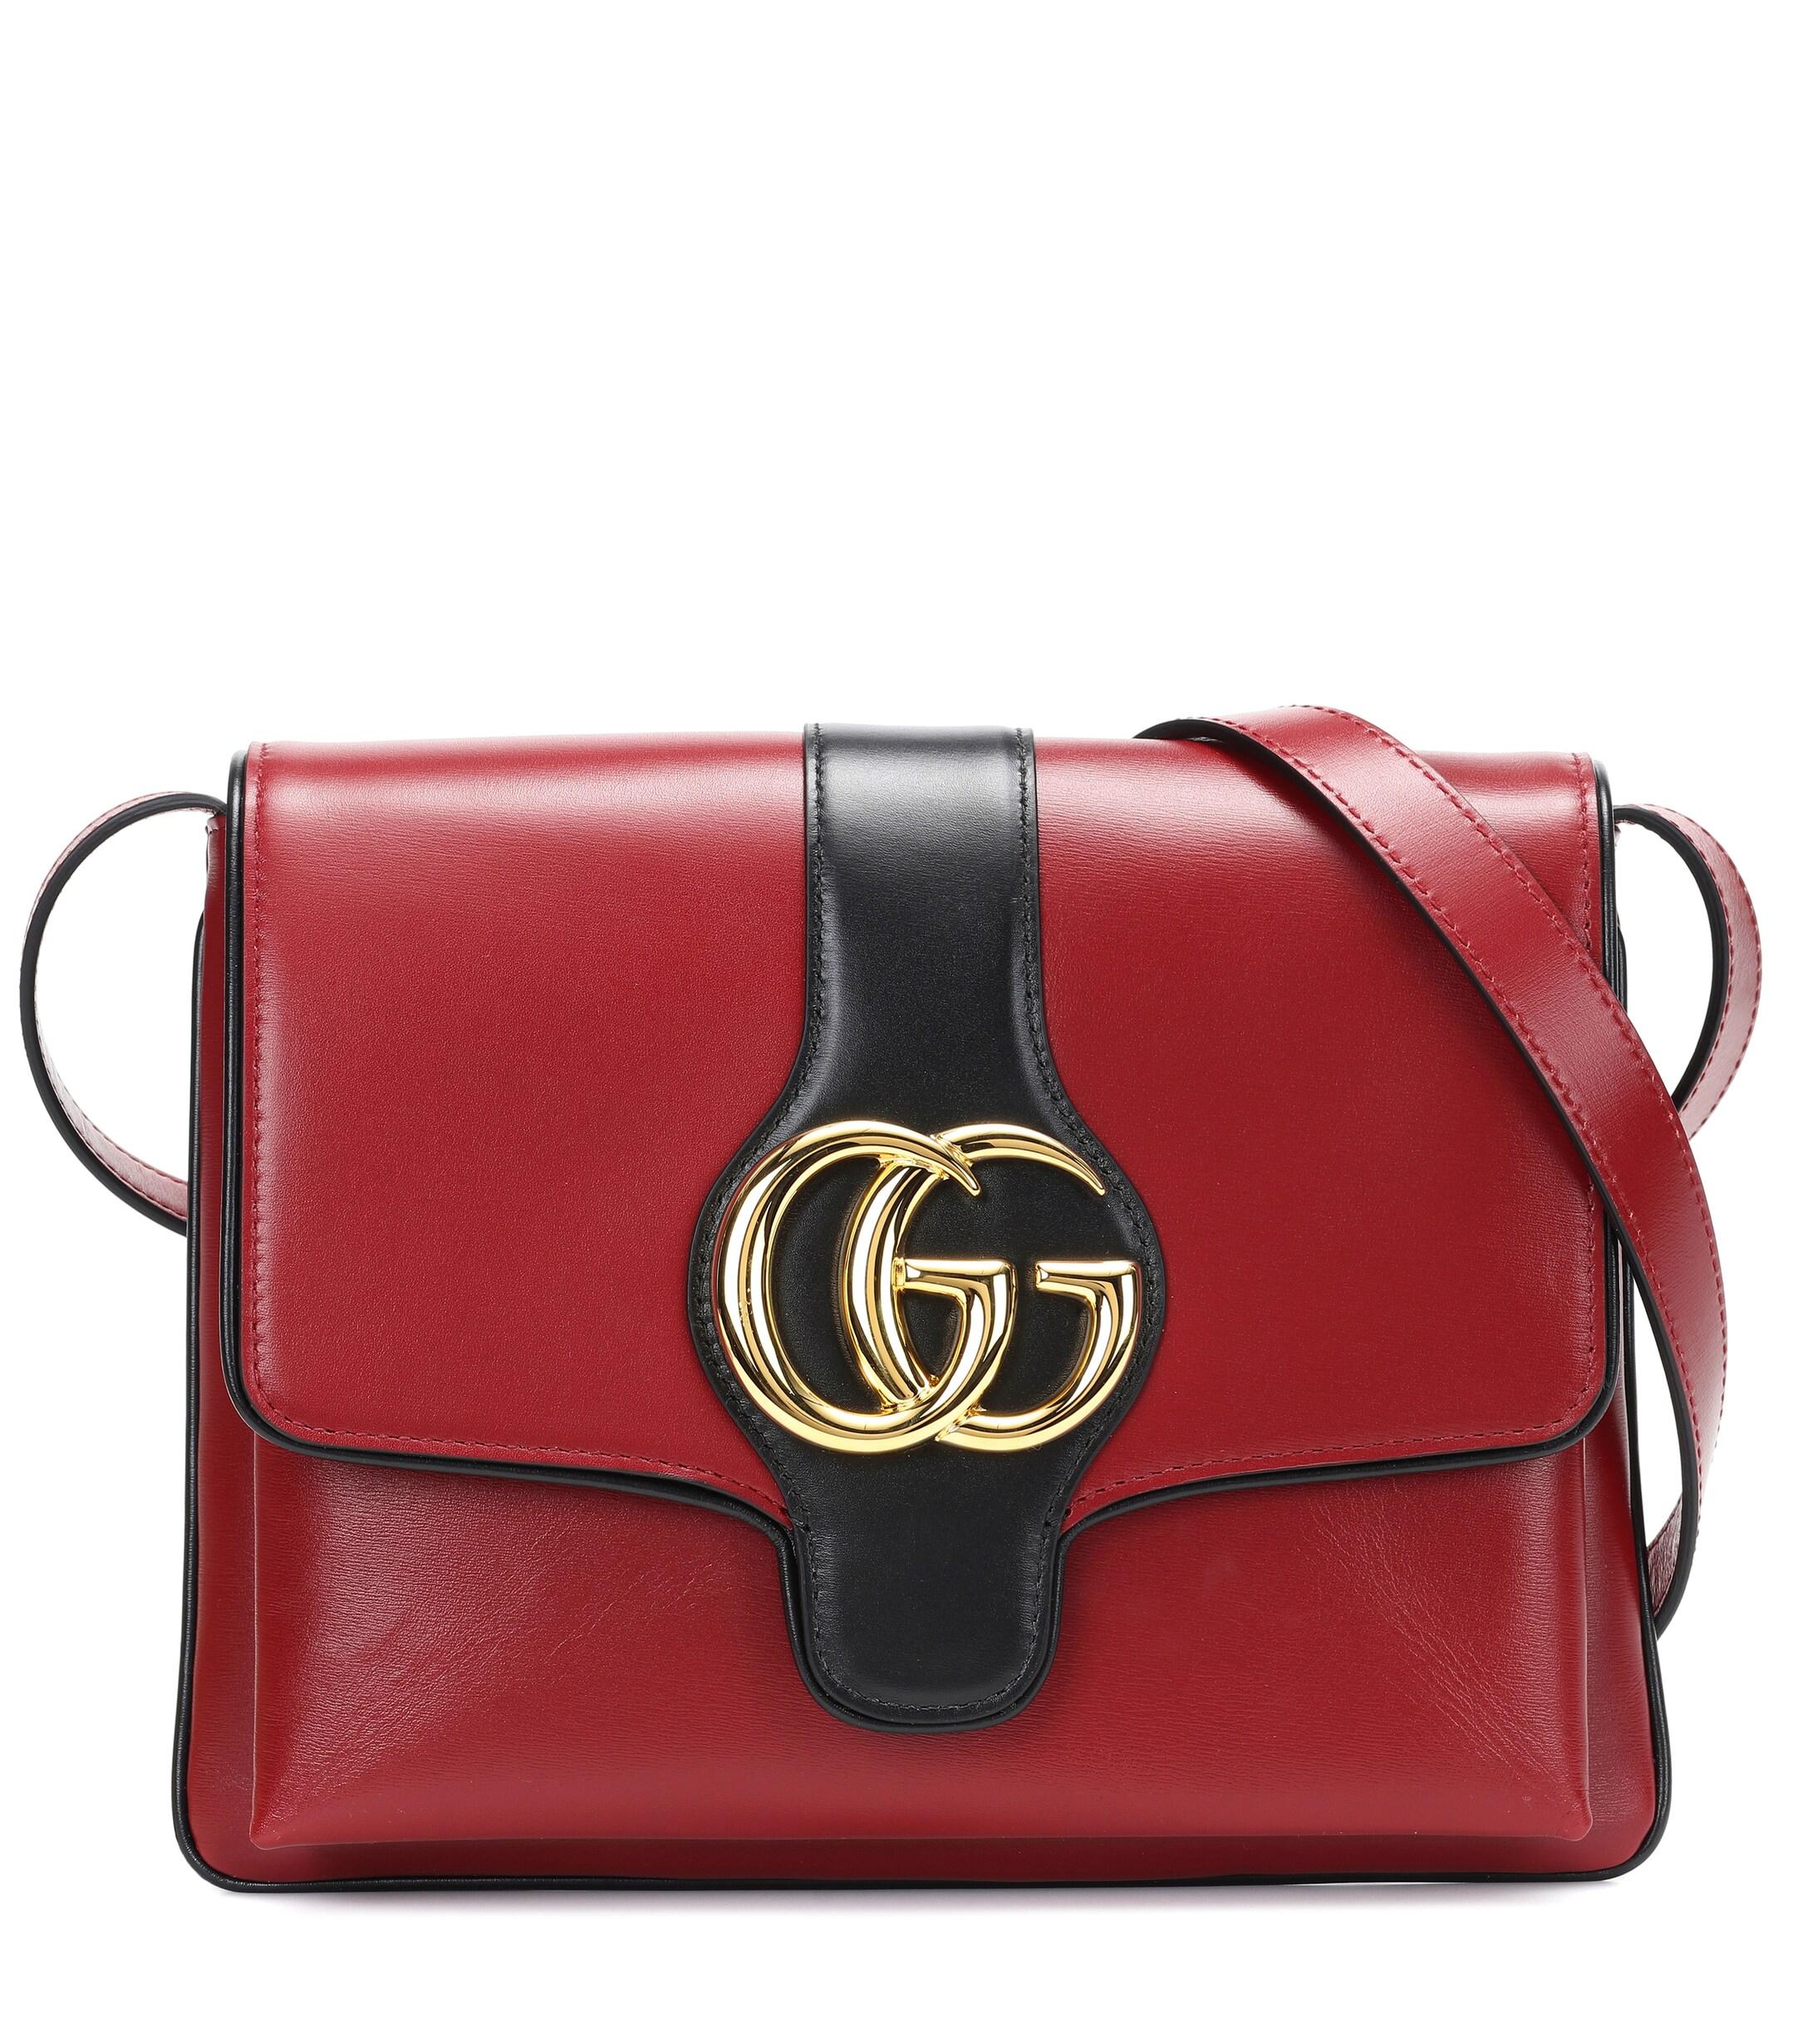 Gucci Red/Black Leather Medium Arli Crossbody Bag